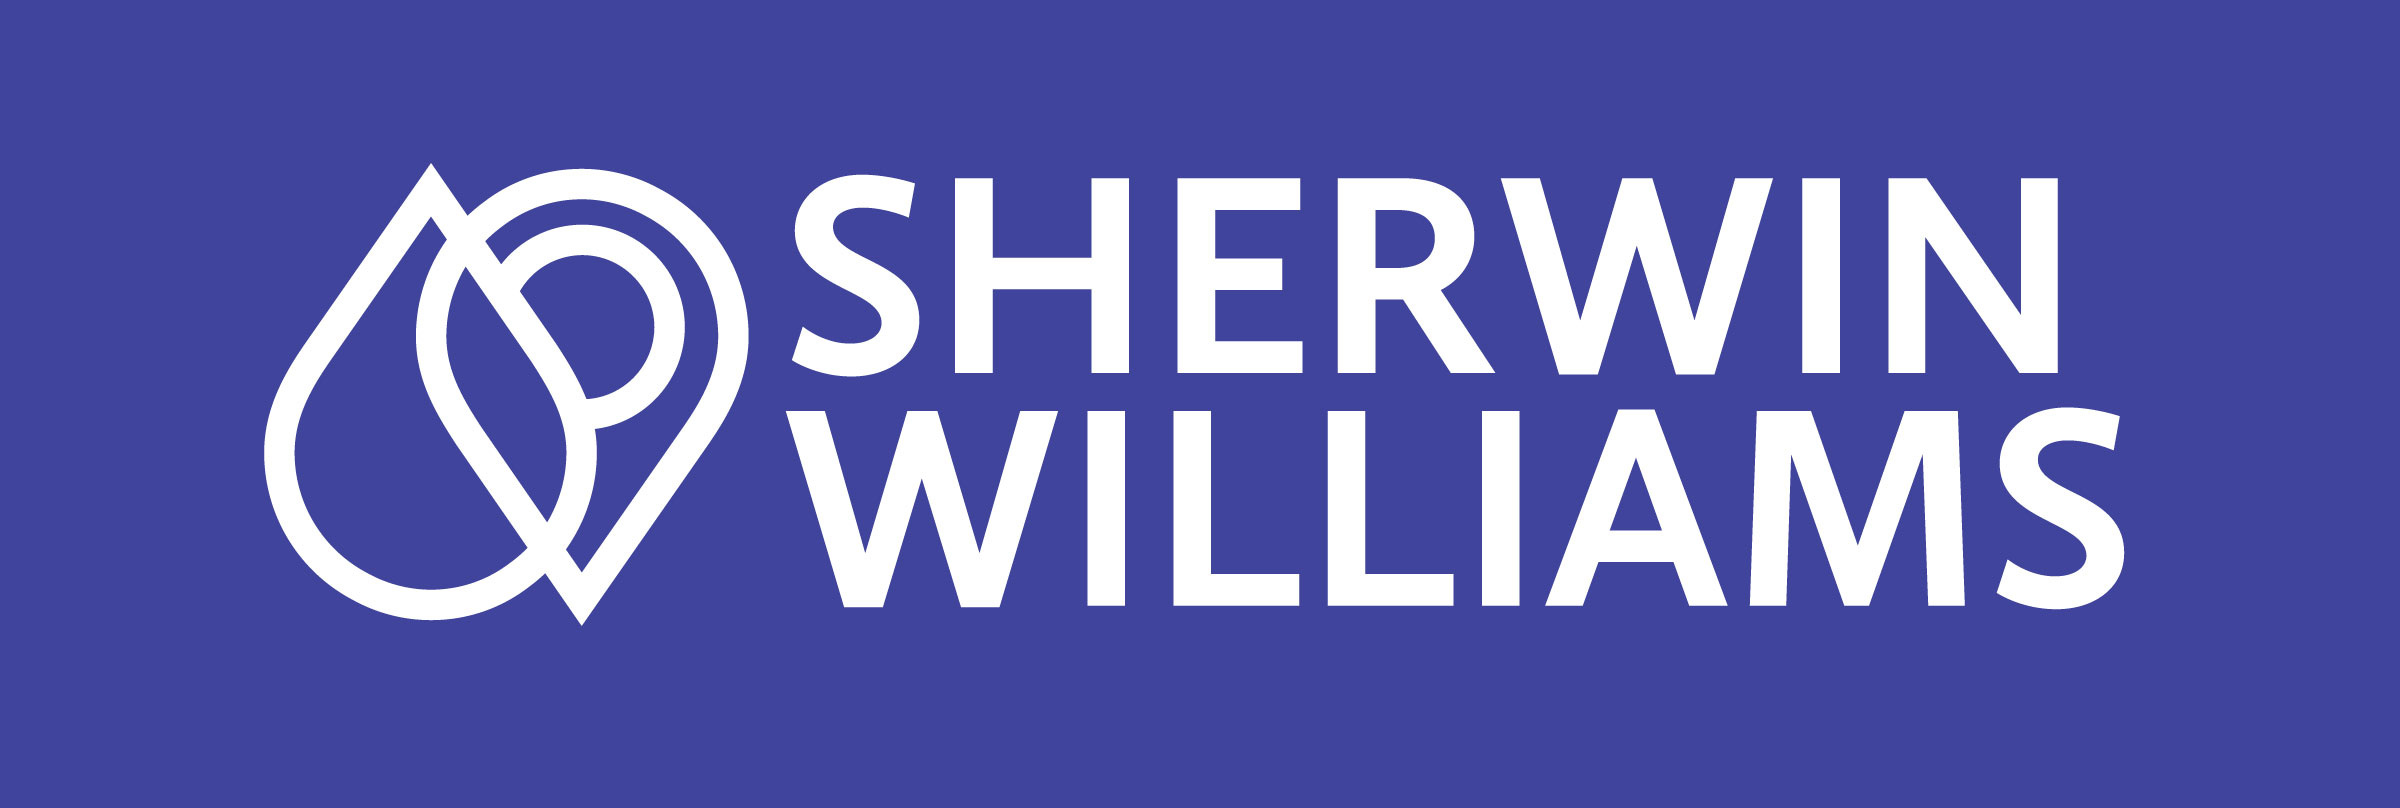 Sherwin williams logo